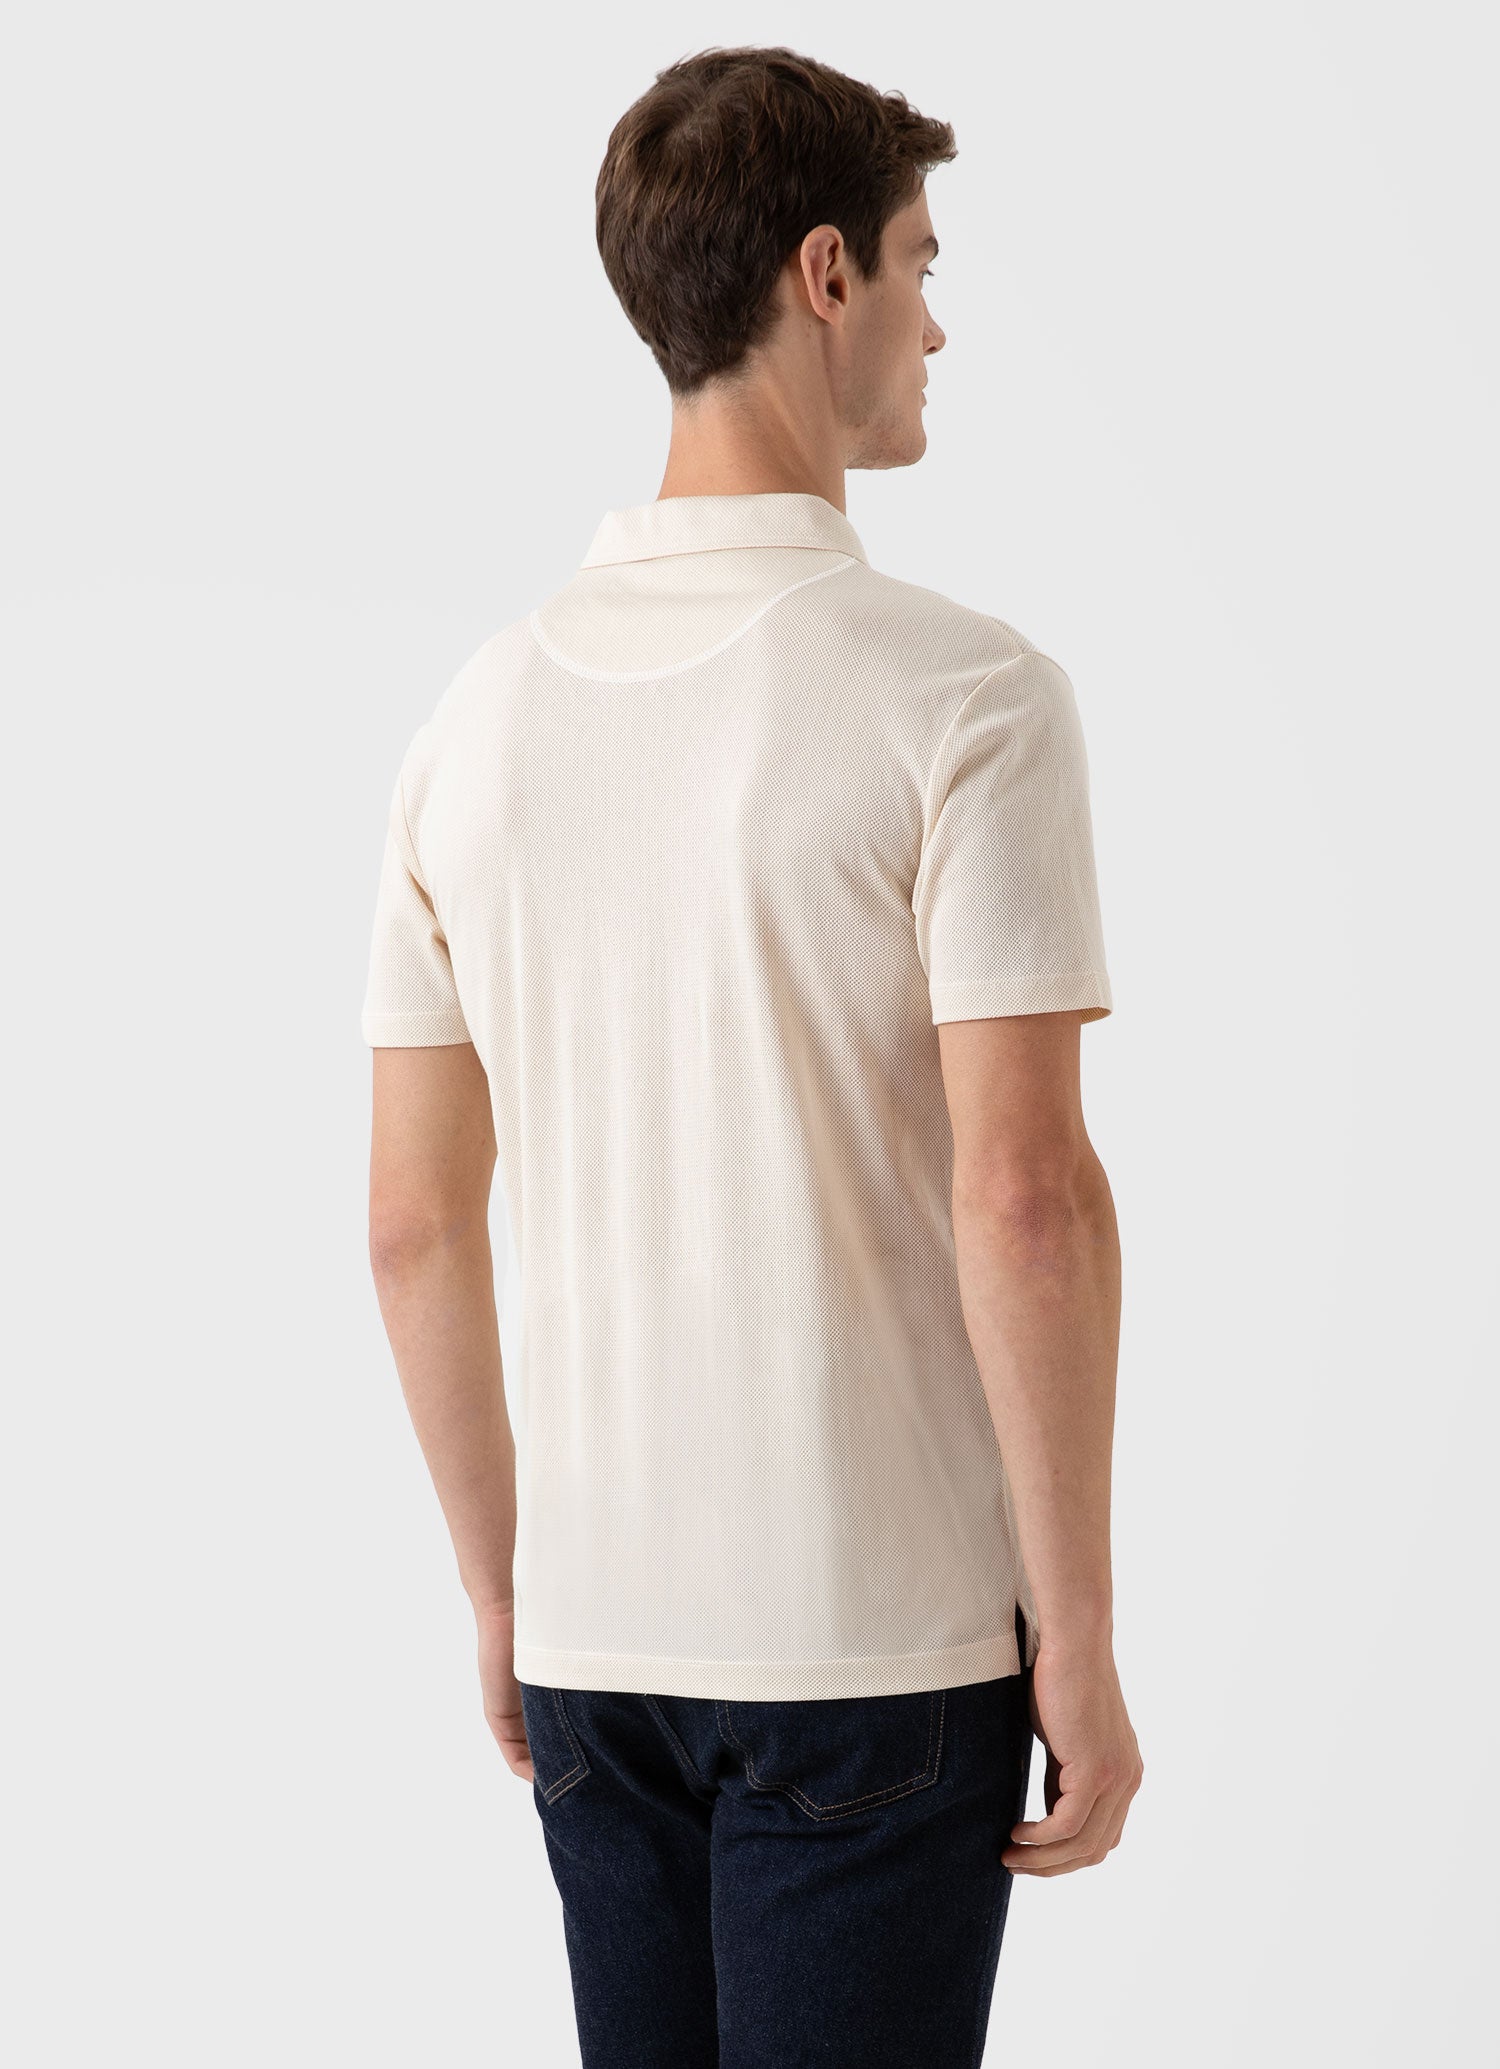 Men's Undyed Riviera Polo Shirt in Undyed | Sunspel